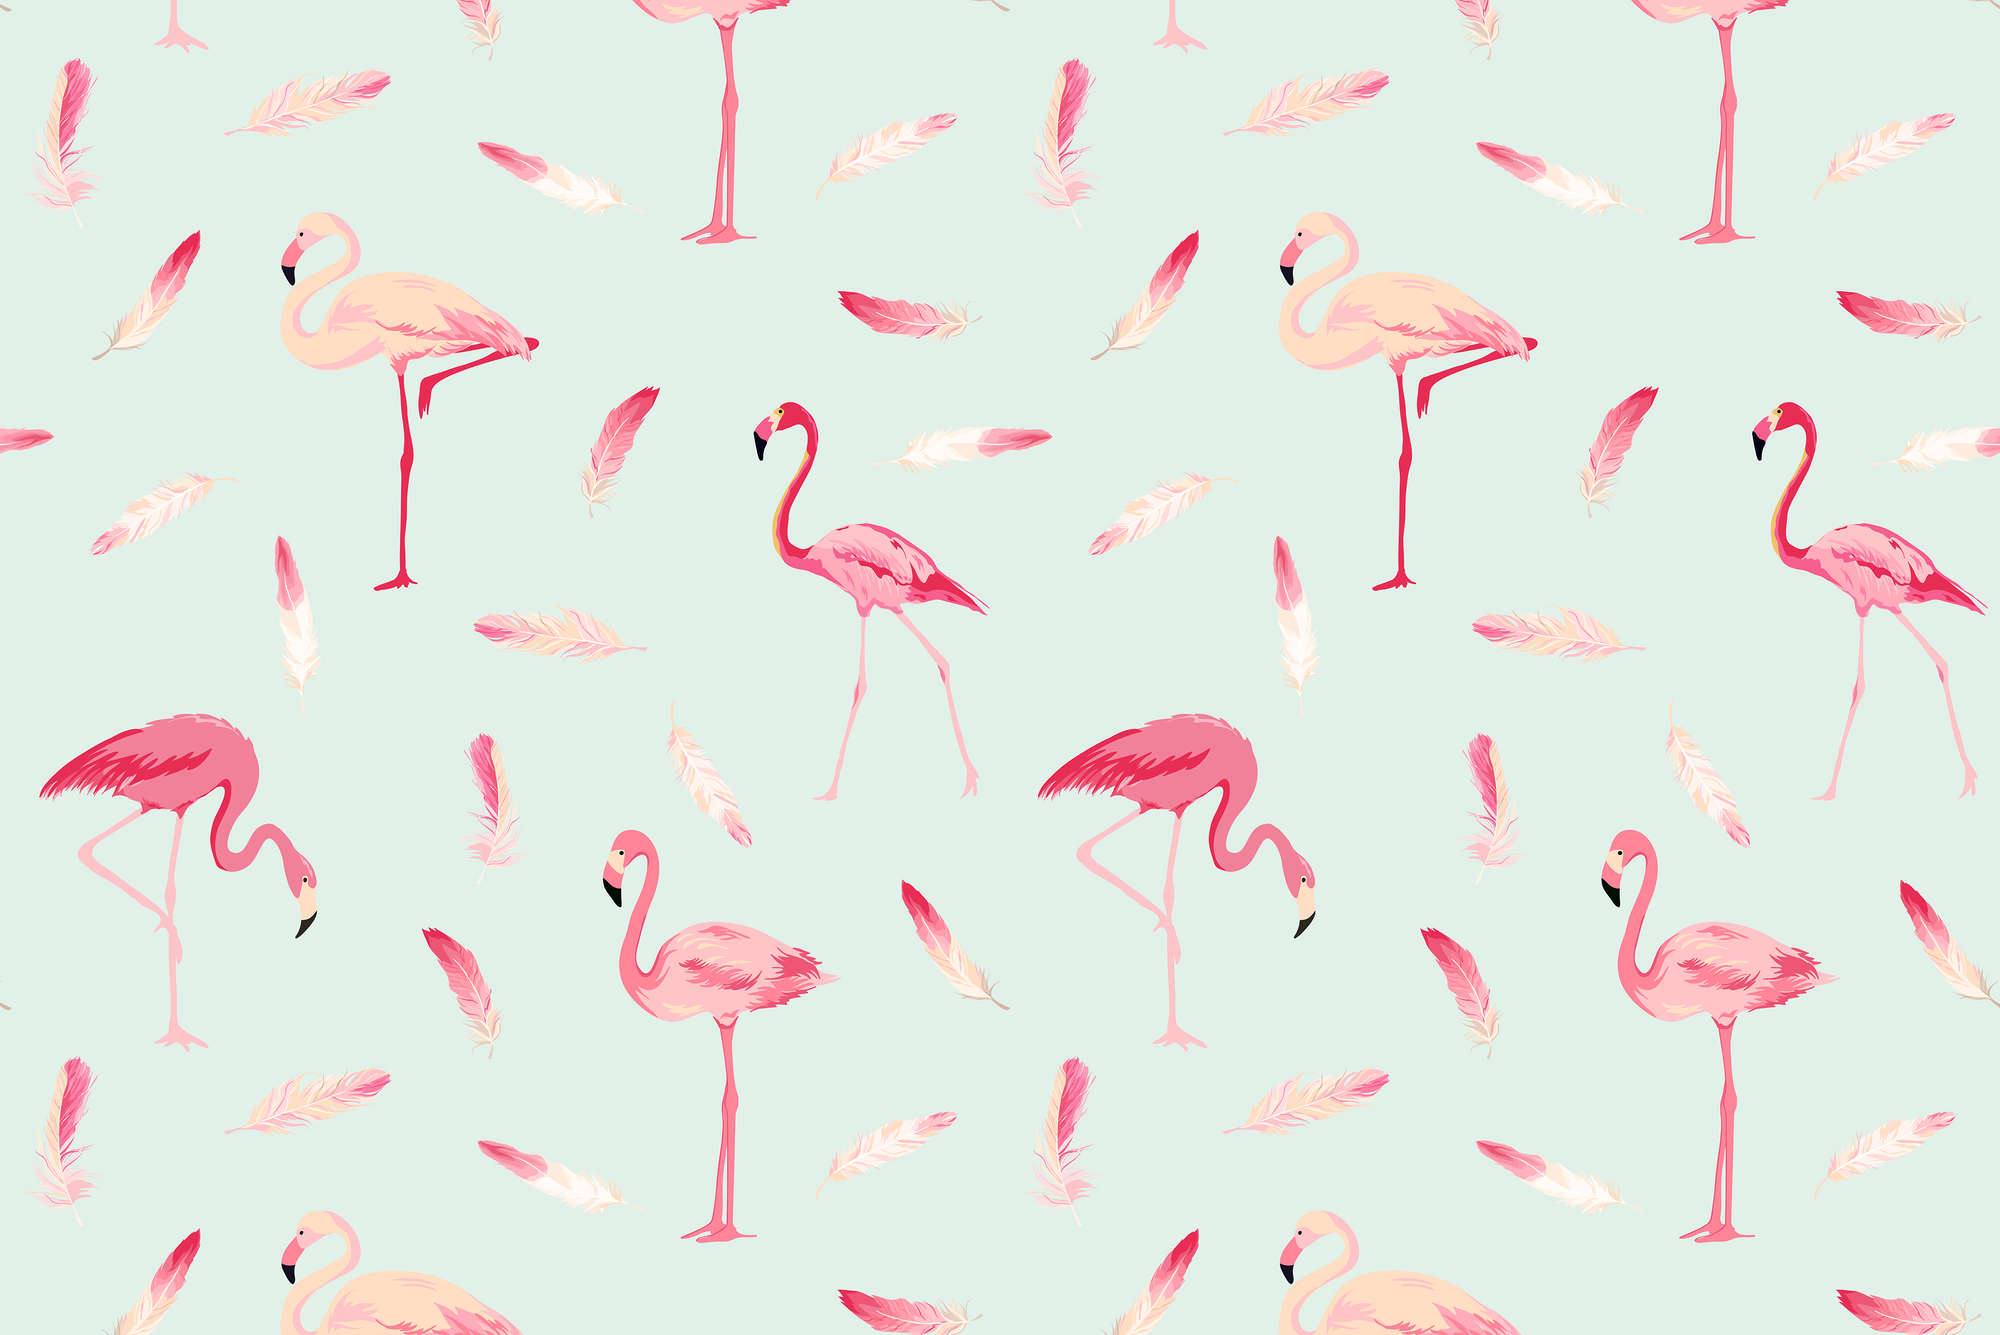             Grafik Fototapete Flamingos und Federn auf Matt Glattvlies
        